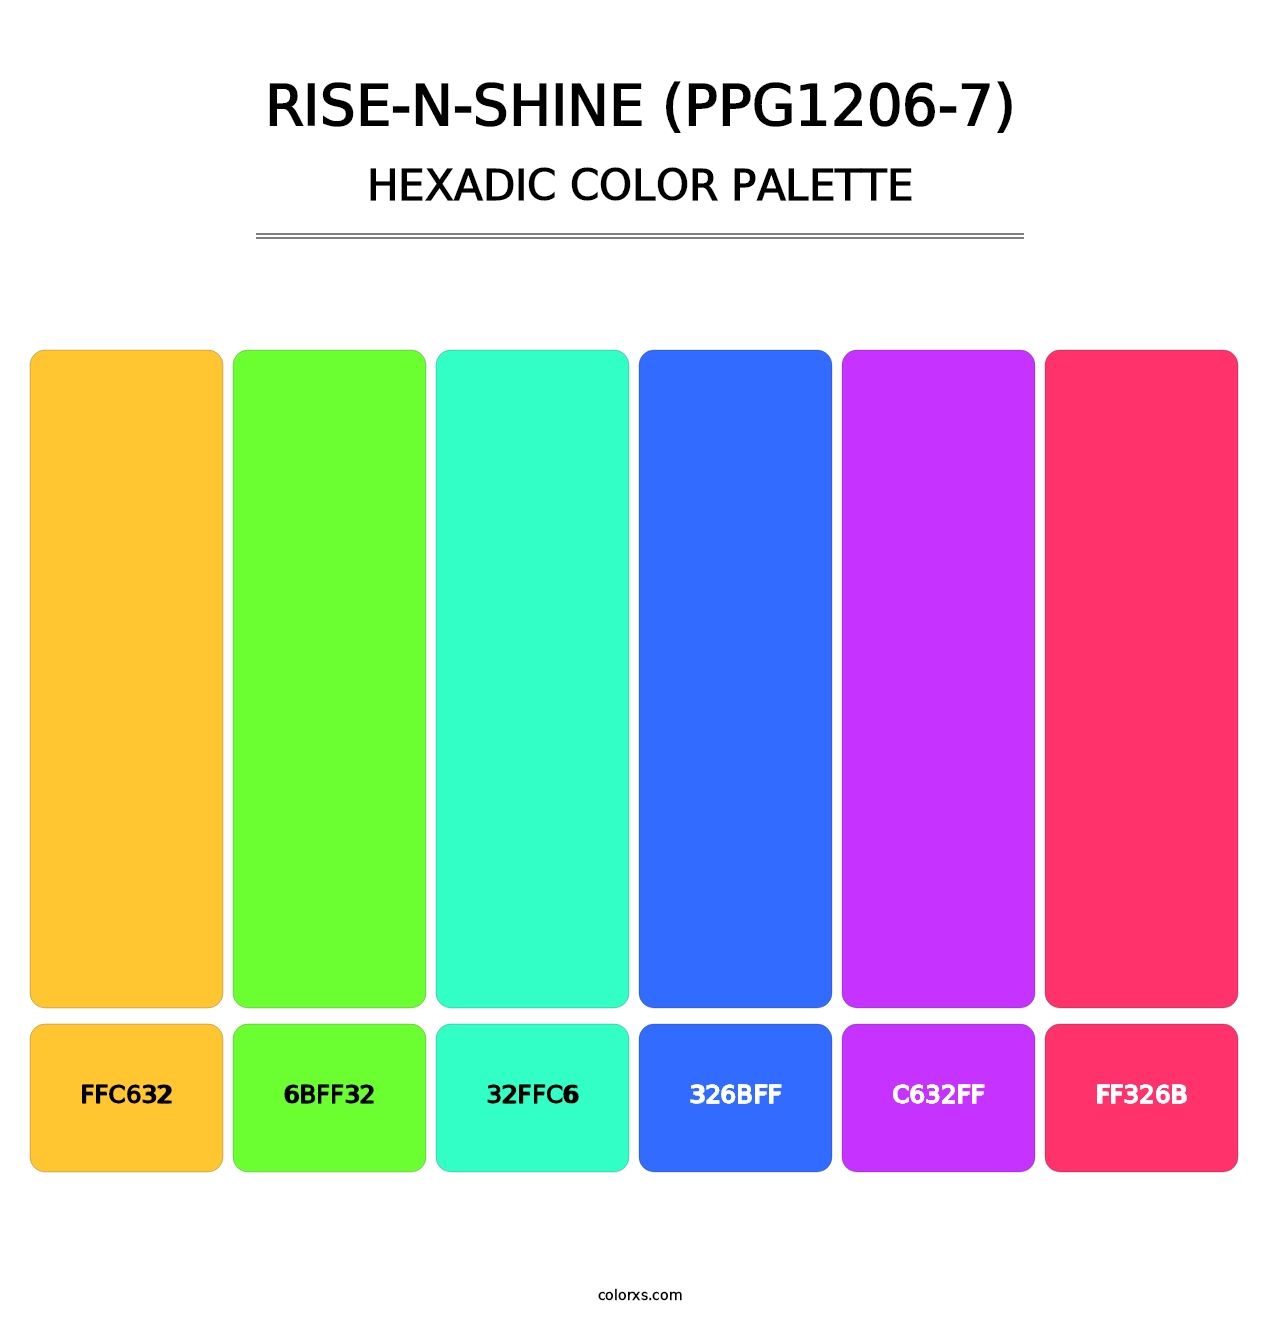 Rise-N-Shine (PPG1206-7) - Hexadic Color Palette